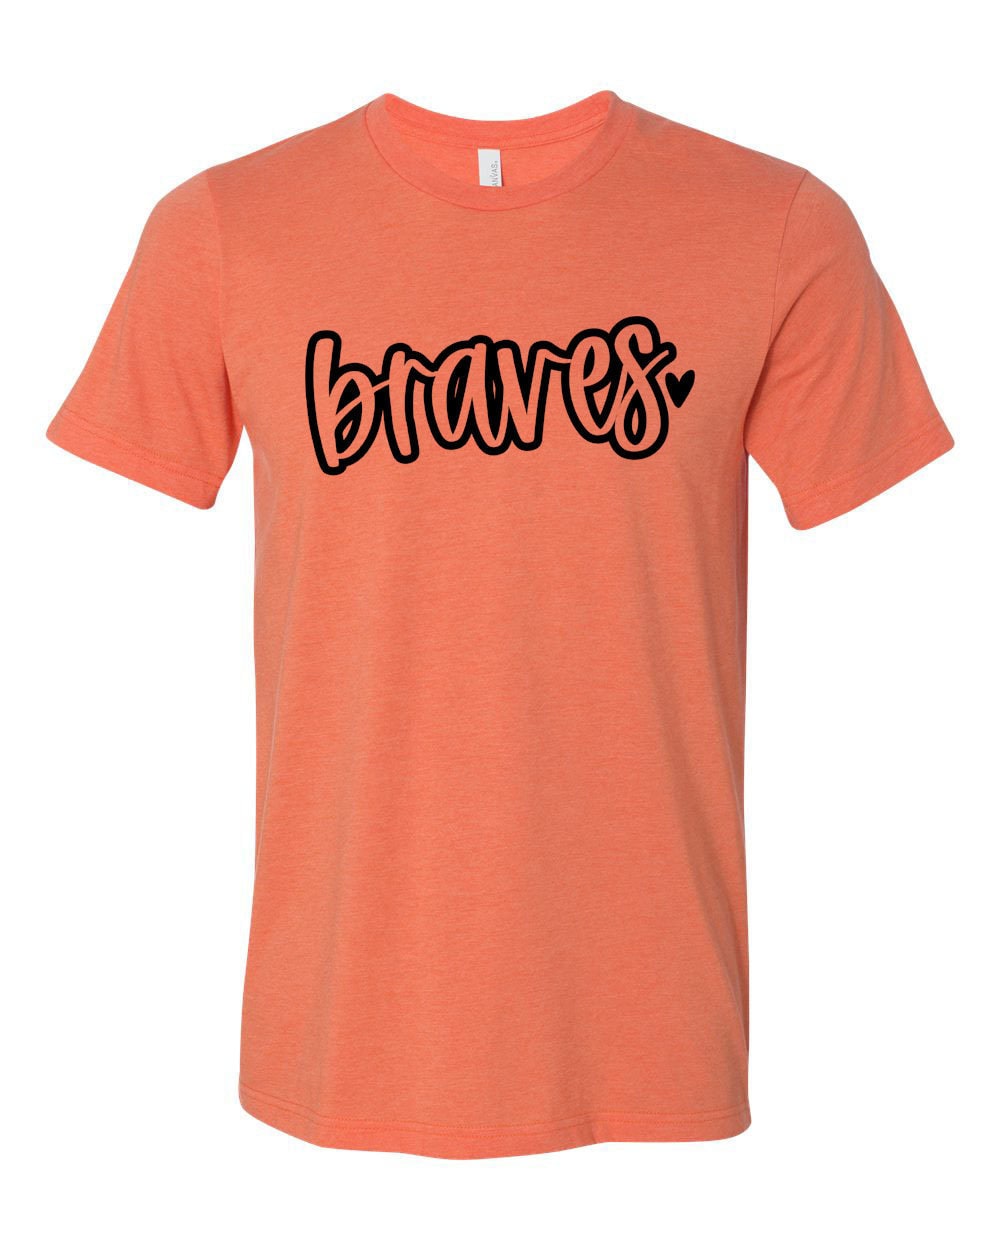 Atlanta Braves Ladies T-Shirt, Ladies Braves Shirts, Braves Baseball Shirts,  Tees